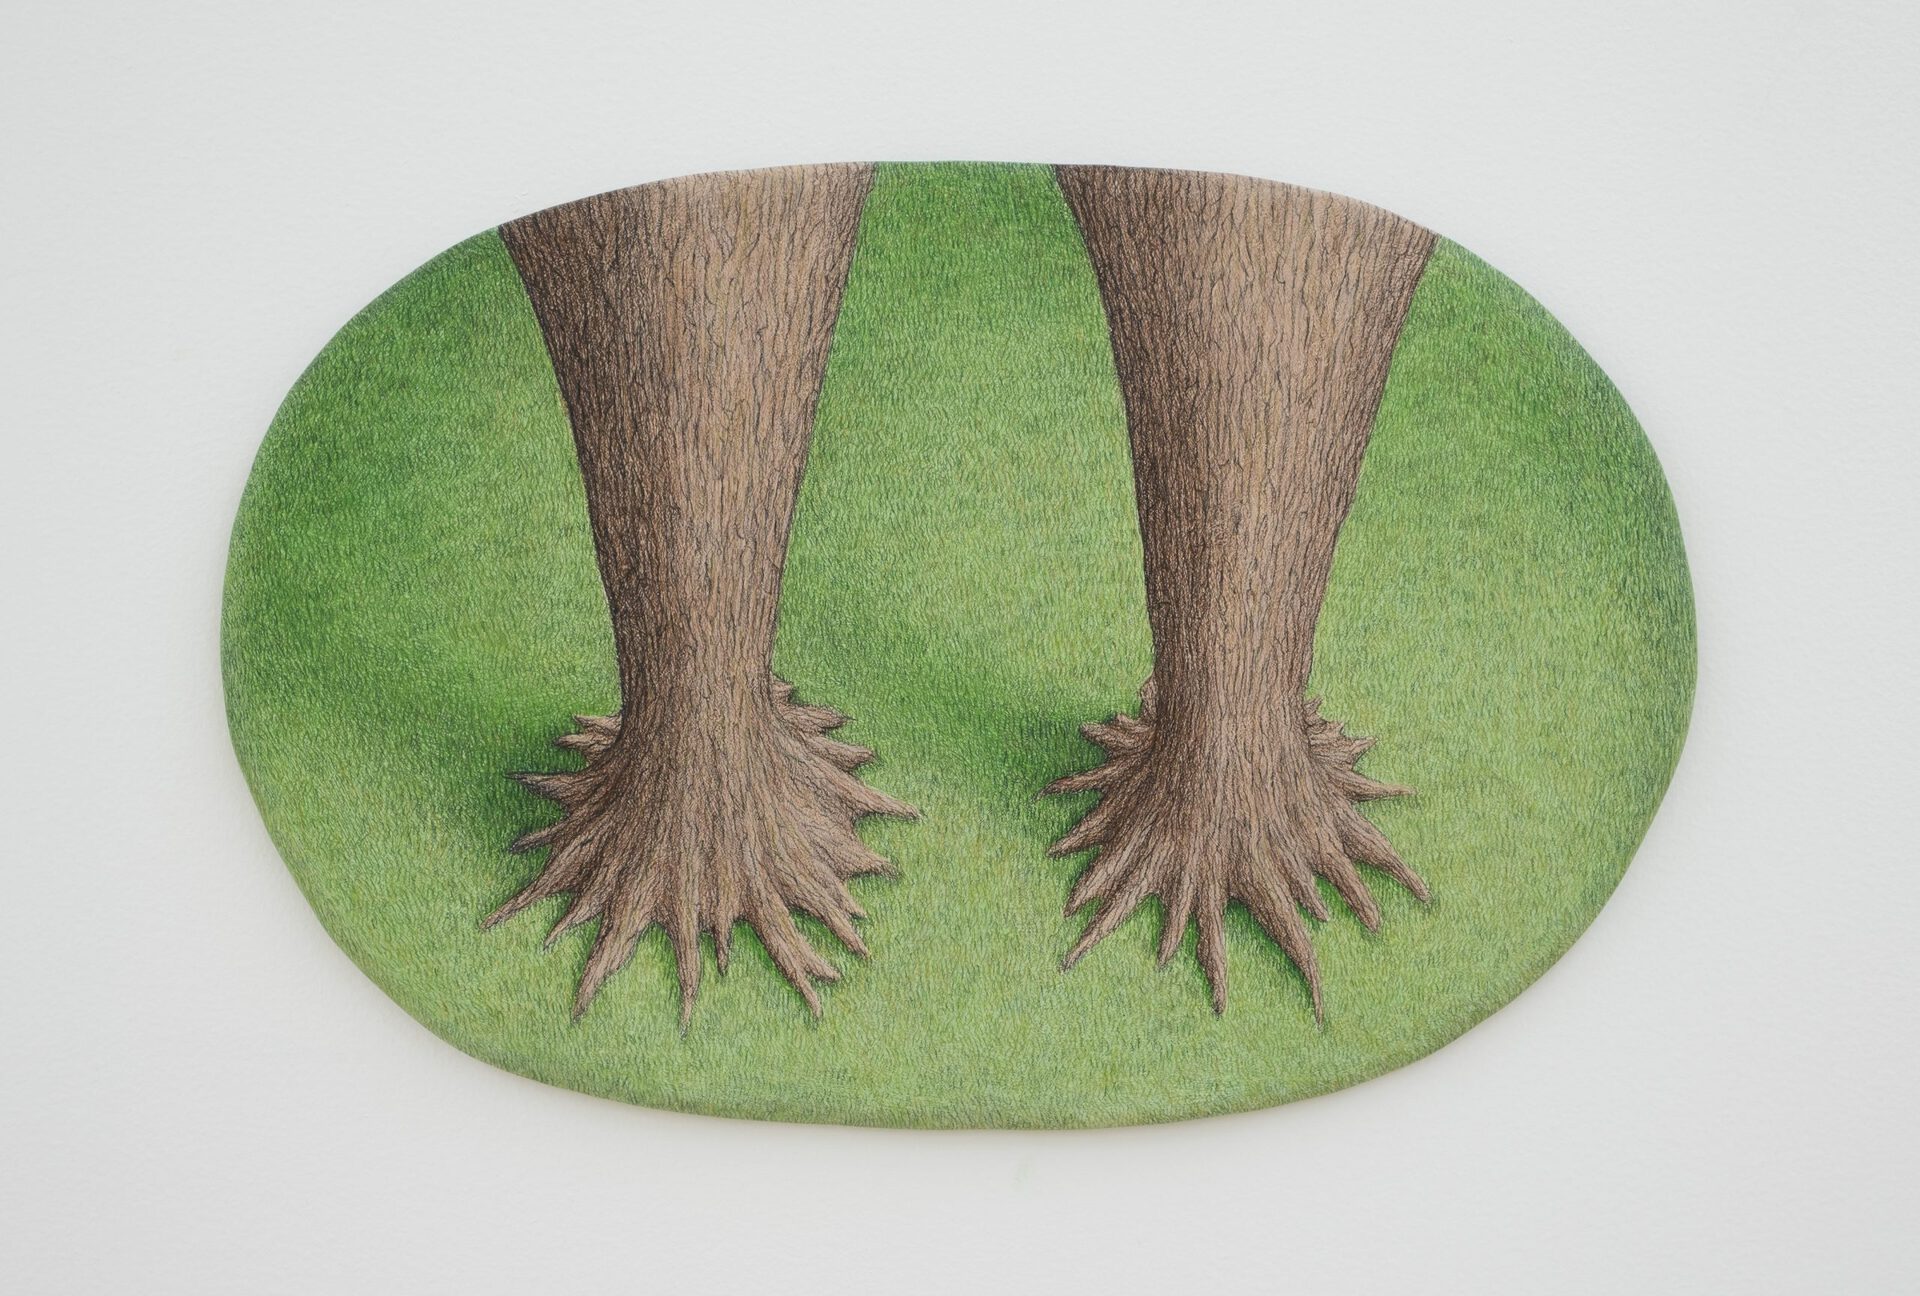 Kian McKeown, Treefeet, 2021, colored pencil and acrylic on wood 16 5/16 x 12 7/8